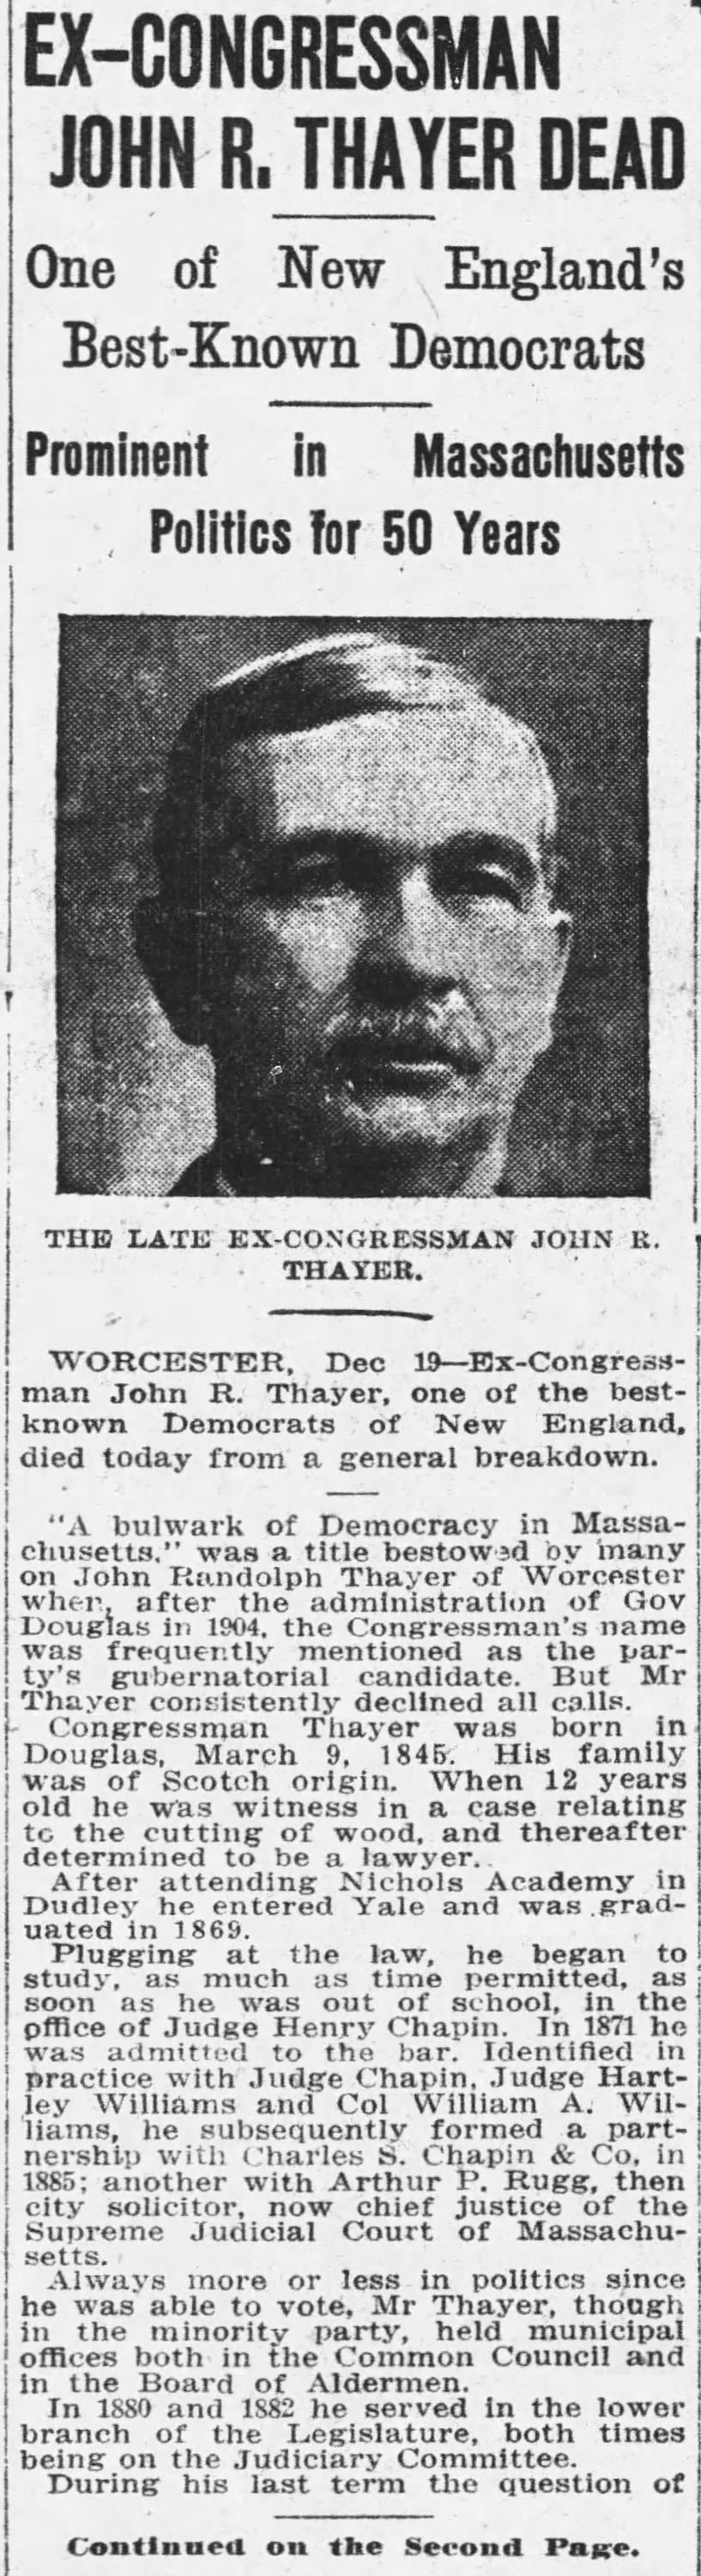 Ex-Congressman John R. Thayer Dead (part 1)